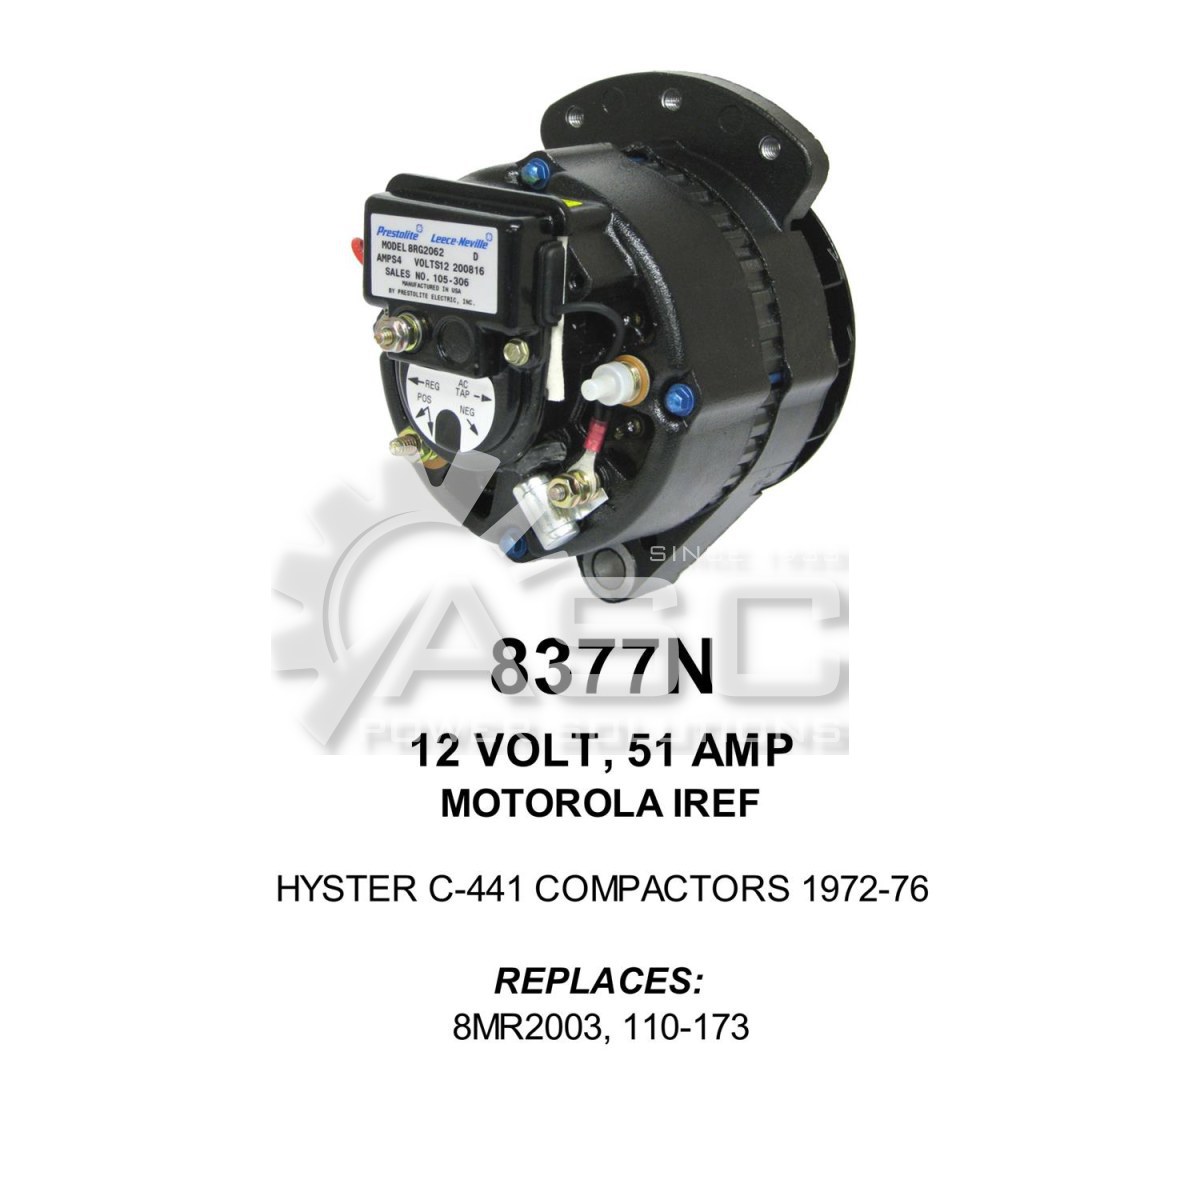 A161060_ASC POWER SOLUTIONS REMAN ALTERNATOR 12V 51AMP